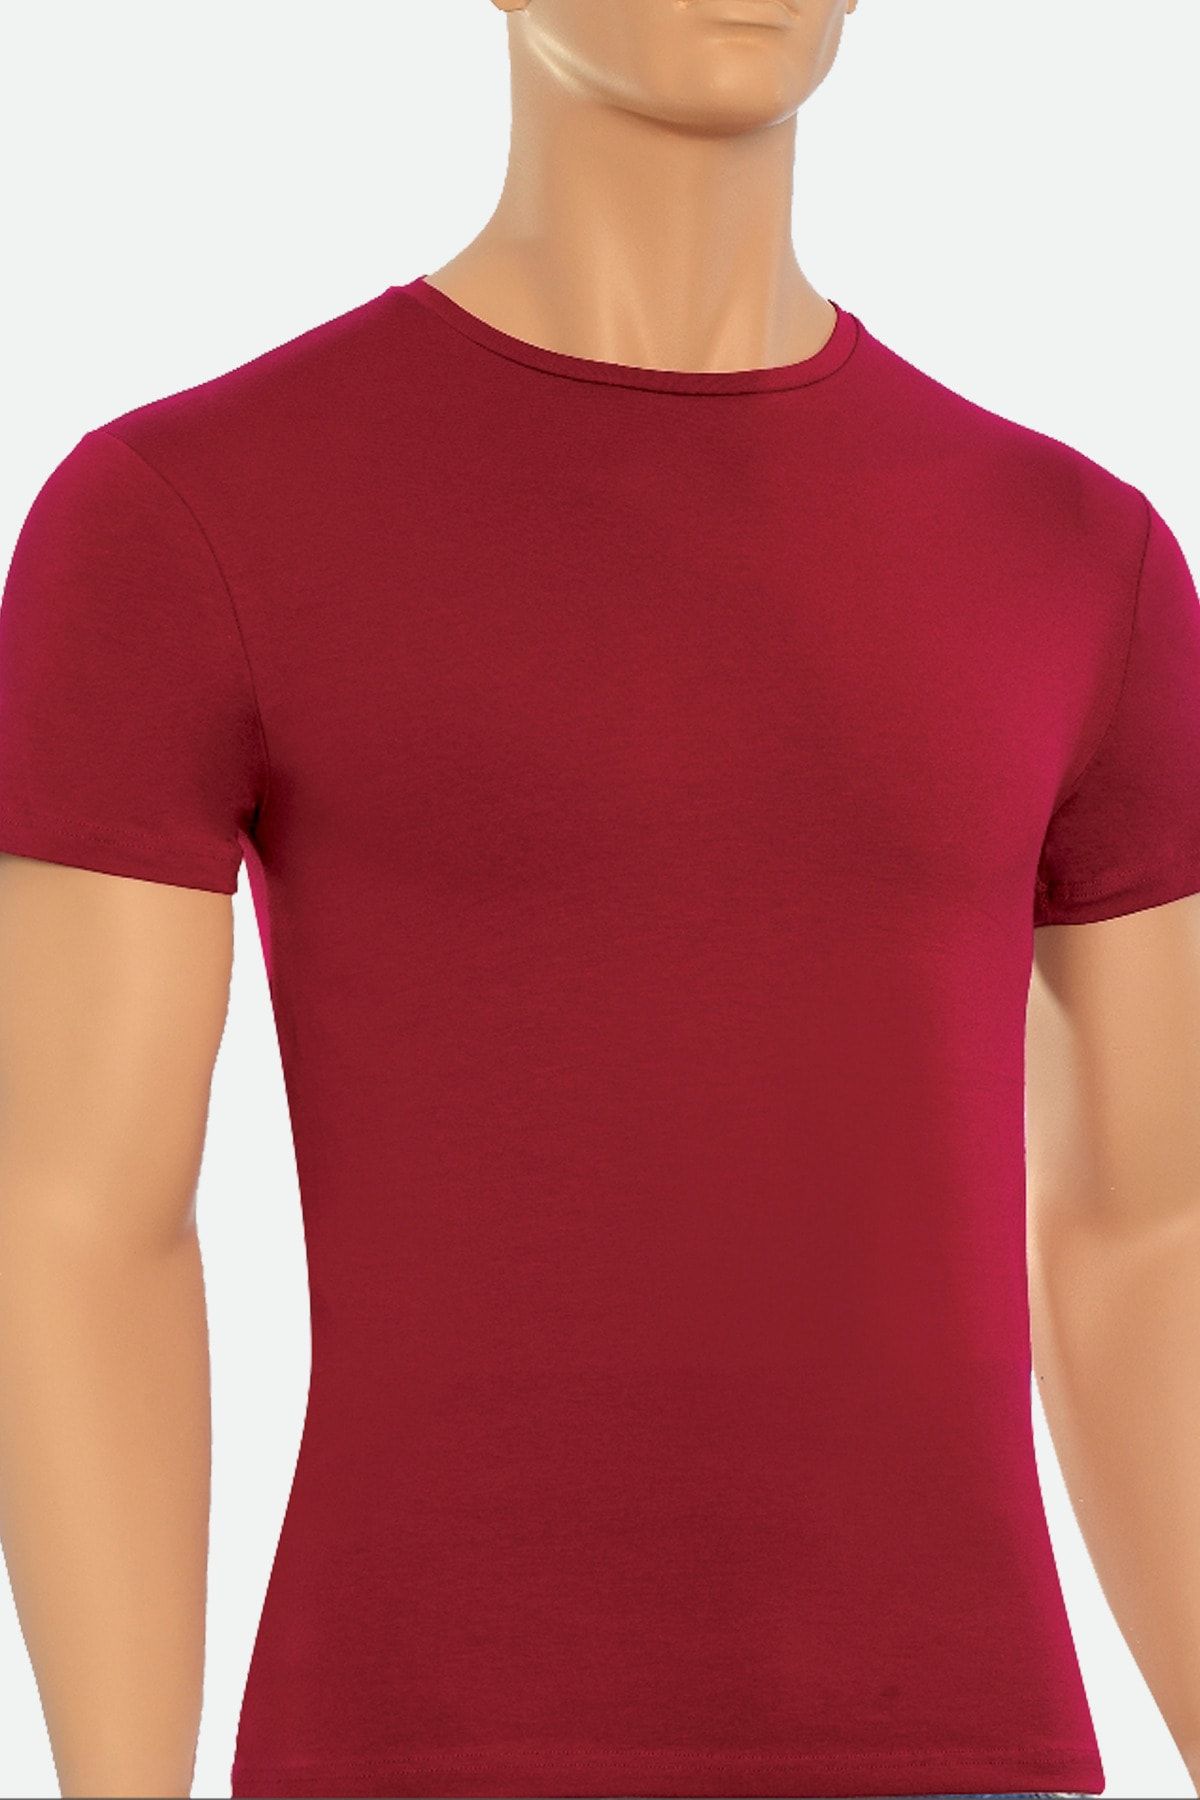 Öts 2'li Erkek Modal Kapalı Yaka T-shirt Kırmızı